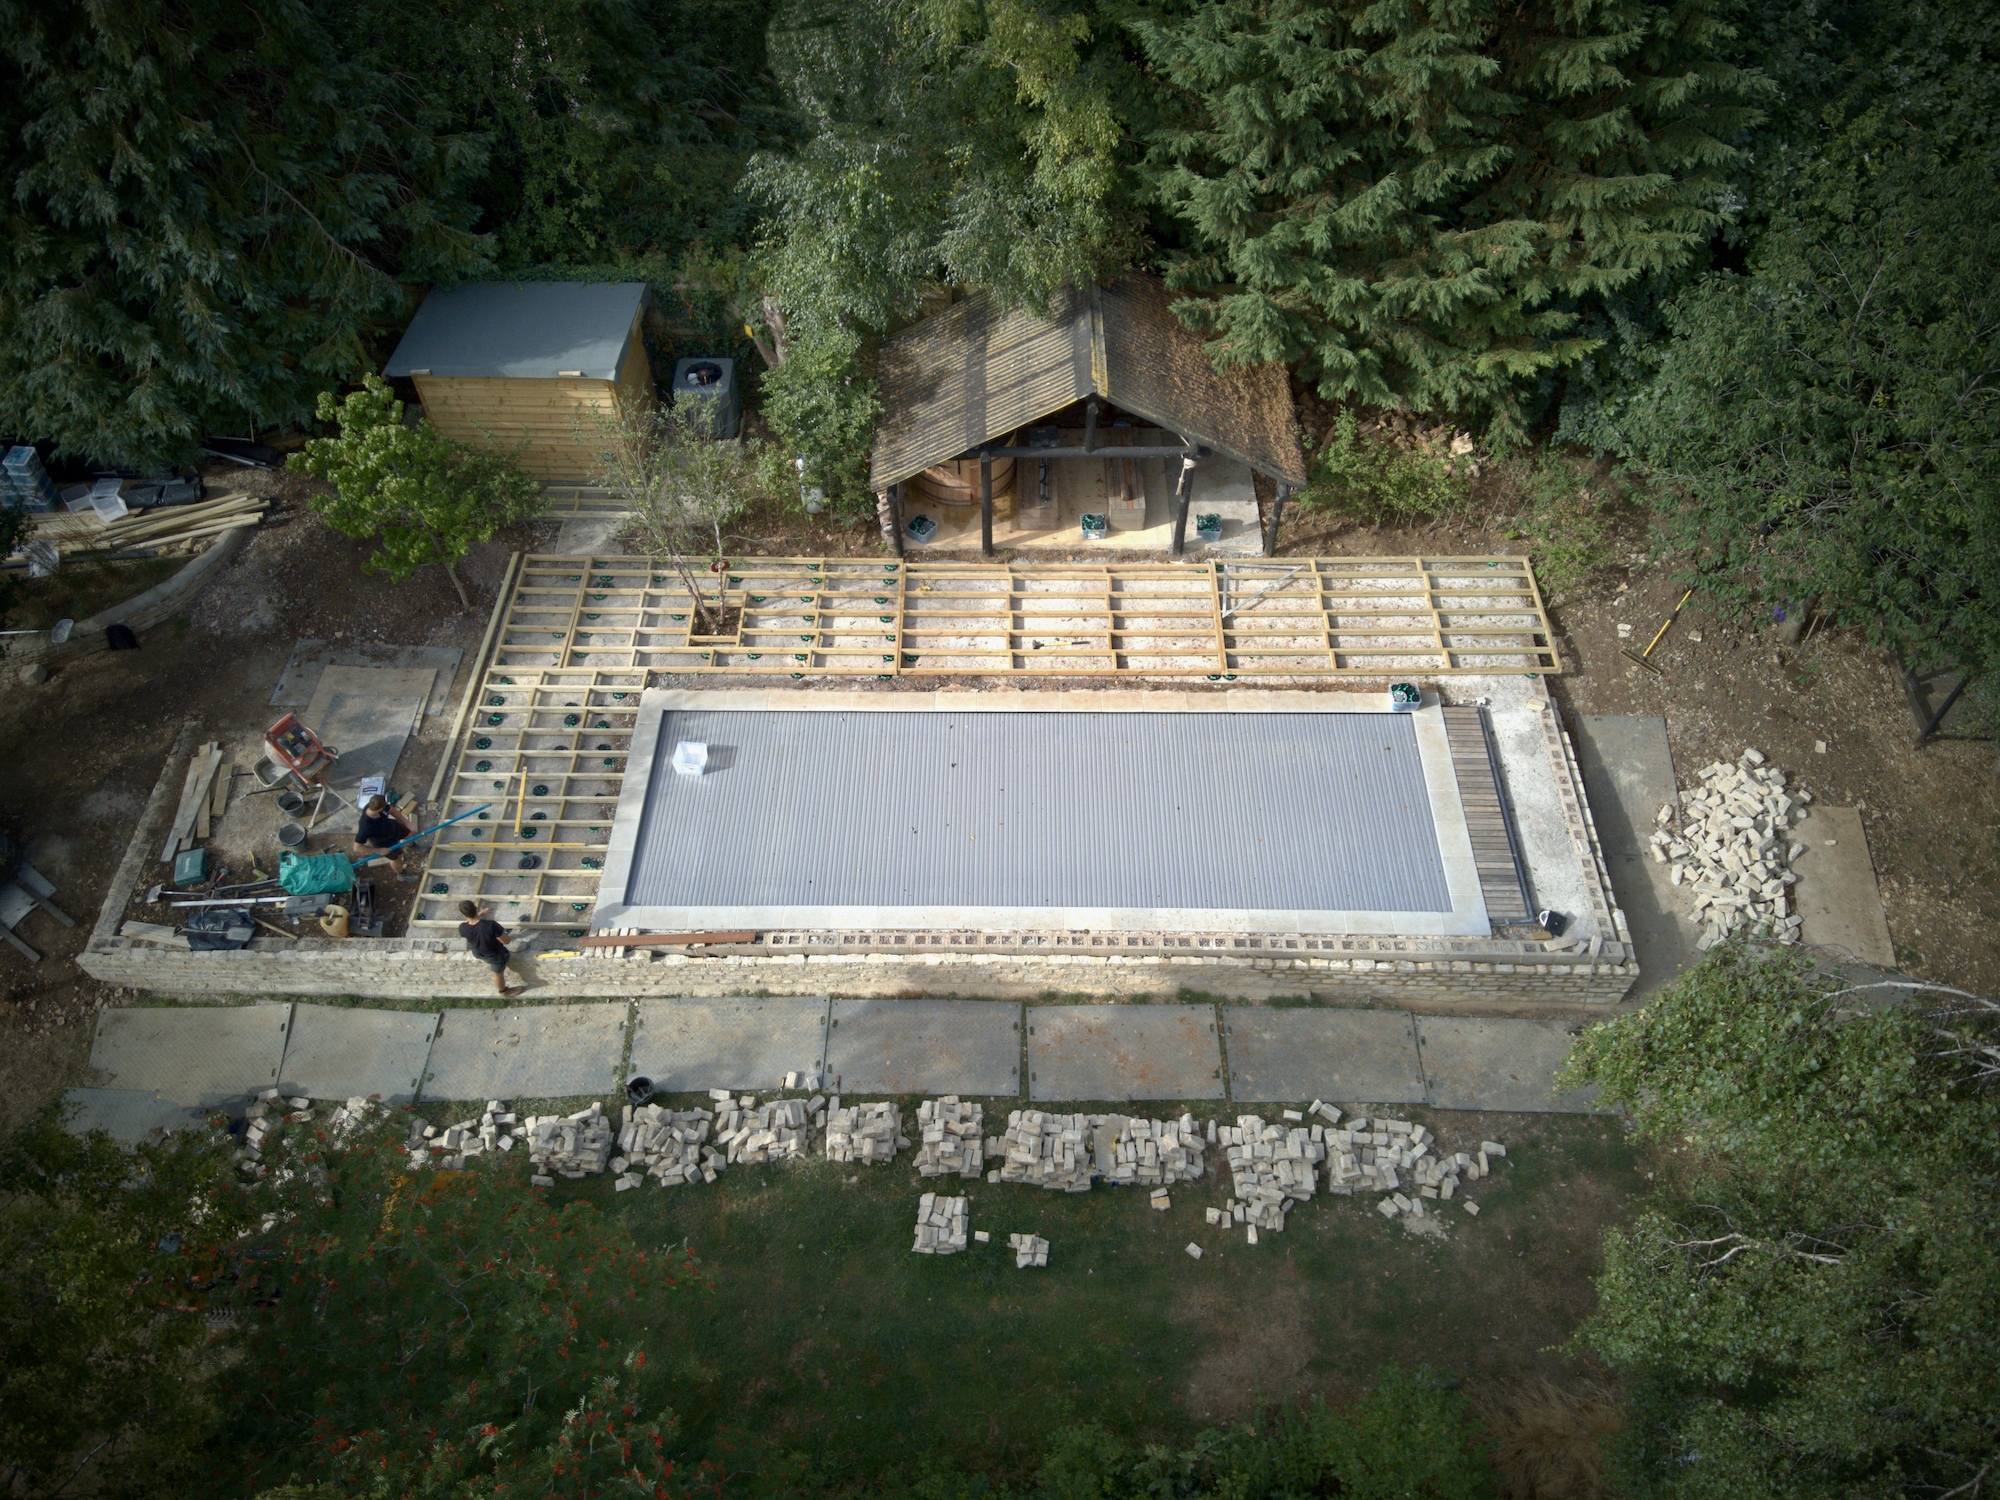 Pool installation in countryside garden